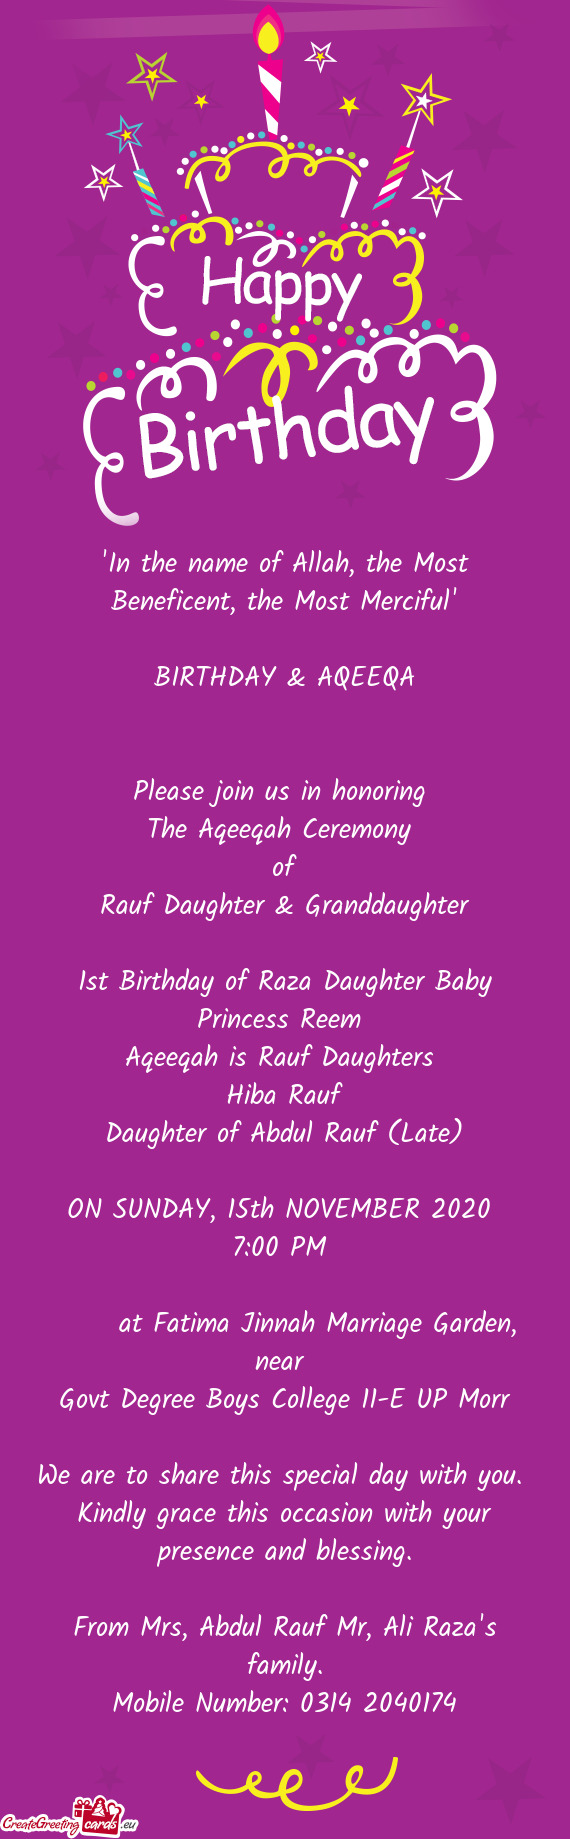 The Aqeeqah Ceremony